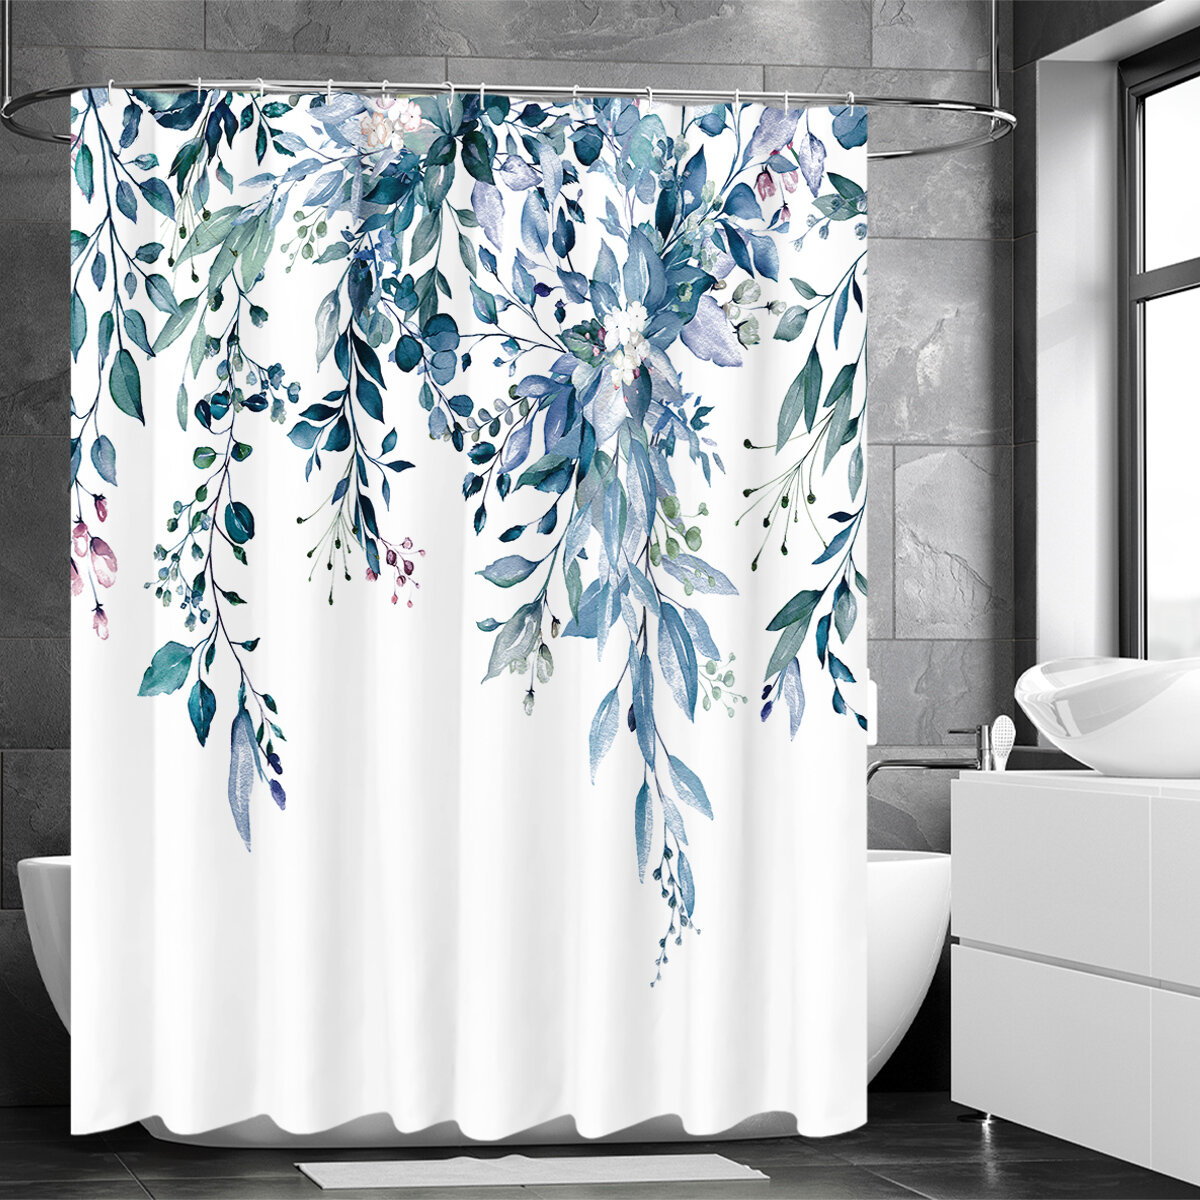 Dewdrop Red Flower Shower Curtain Bathroom Waterproof Polyester Fabric Hooks Set 